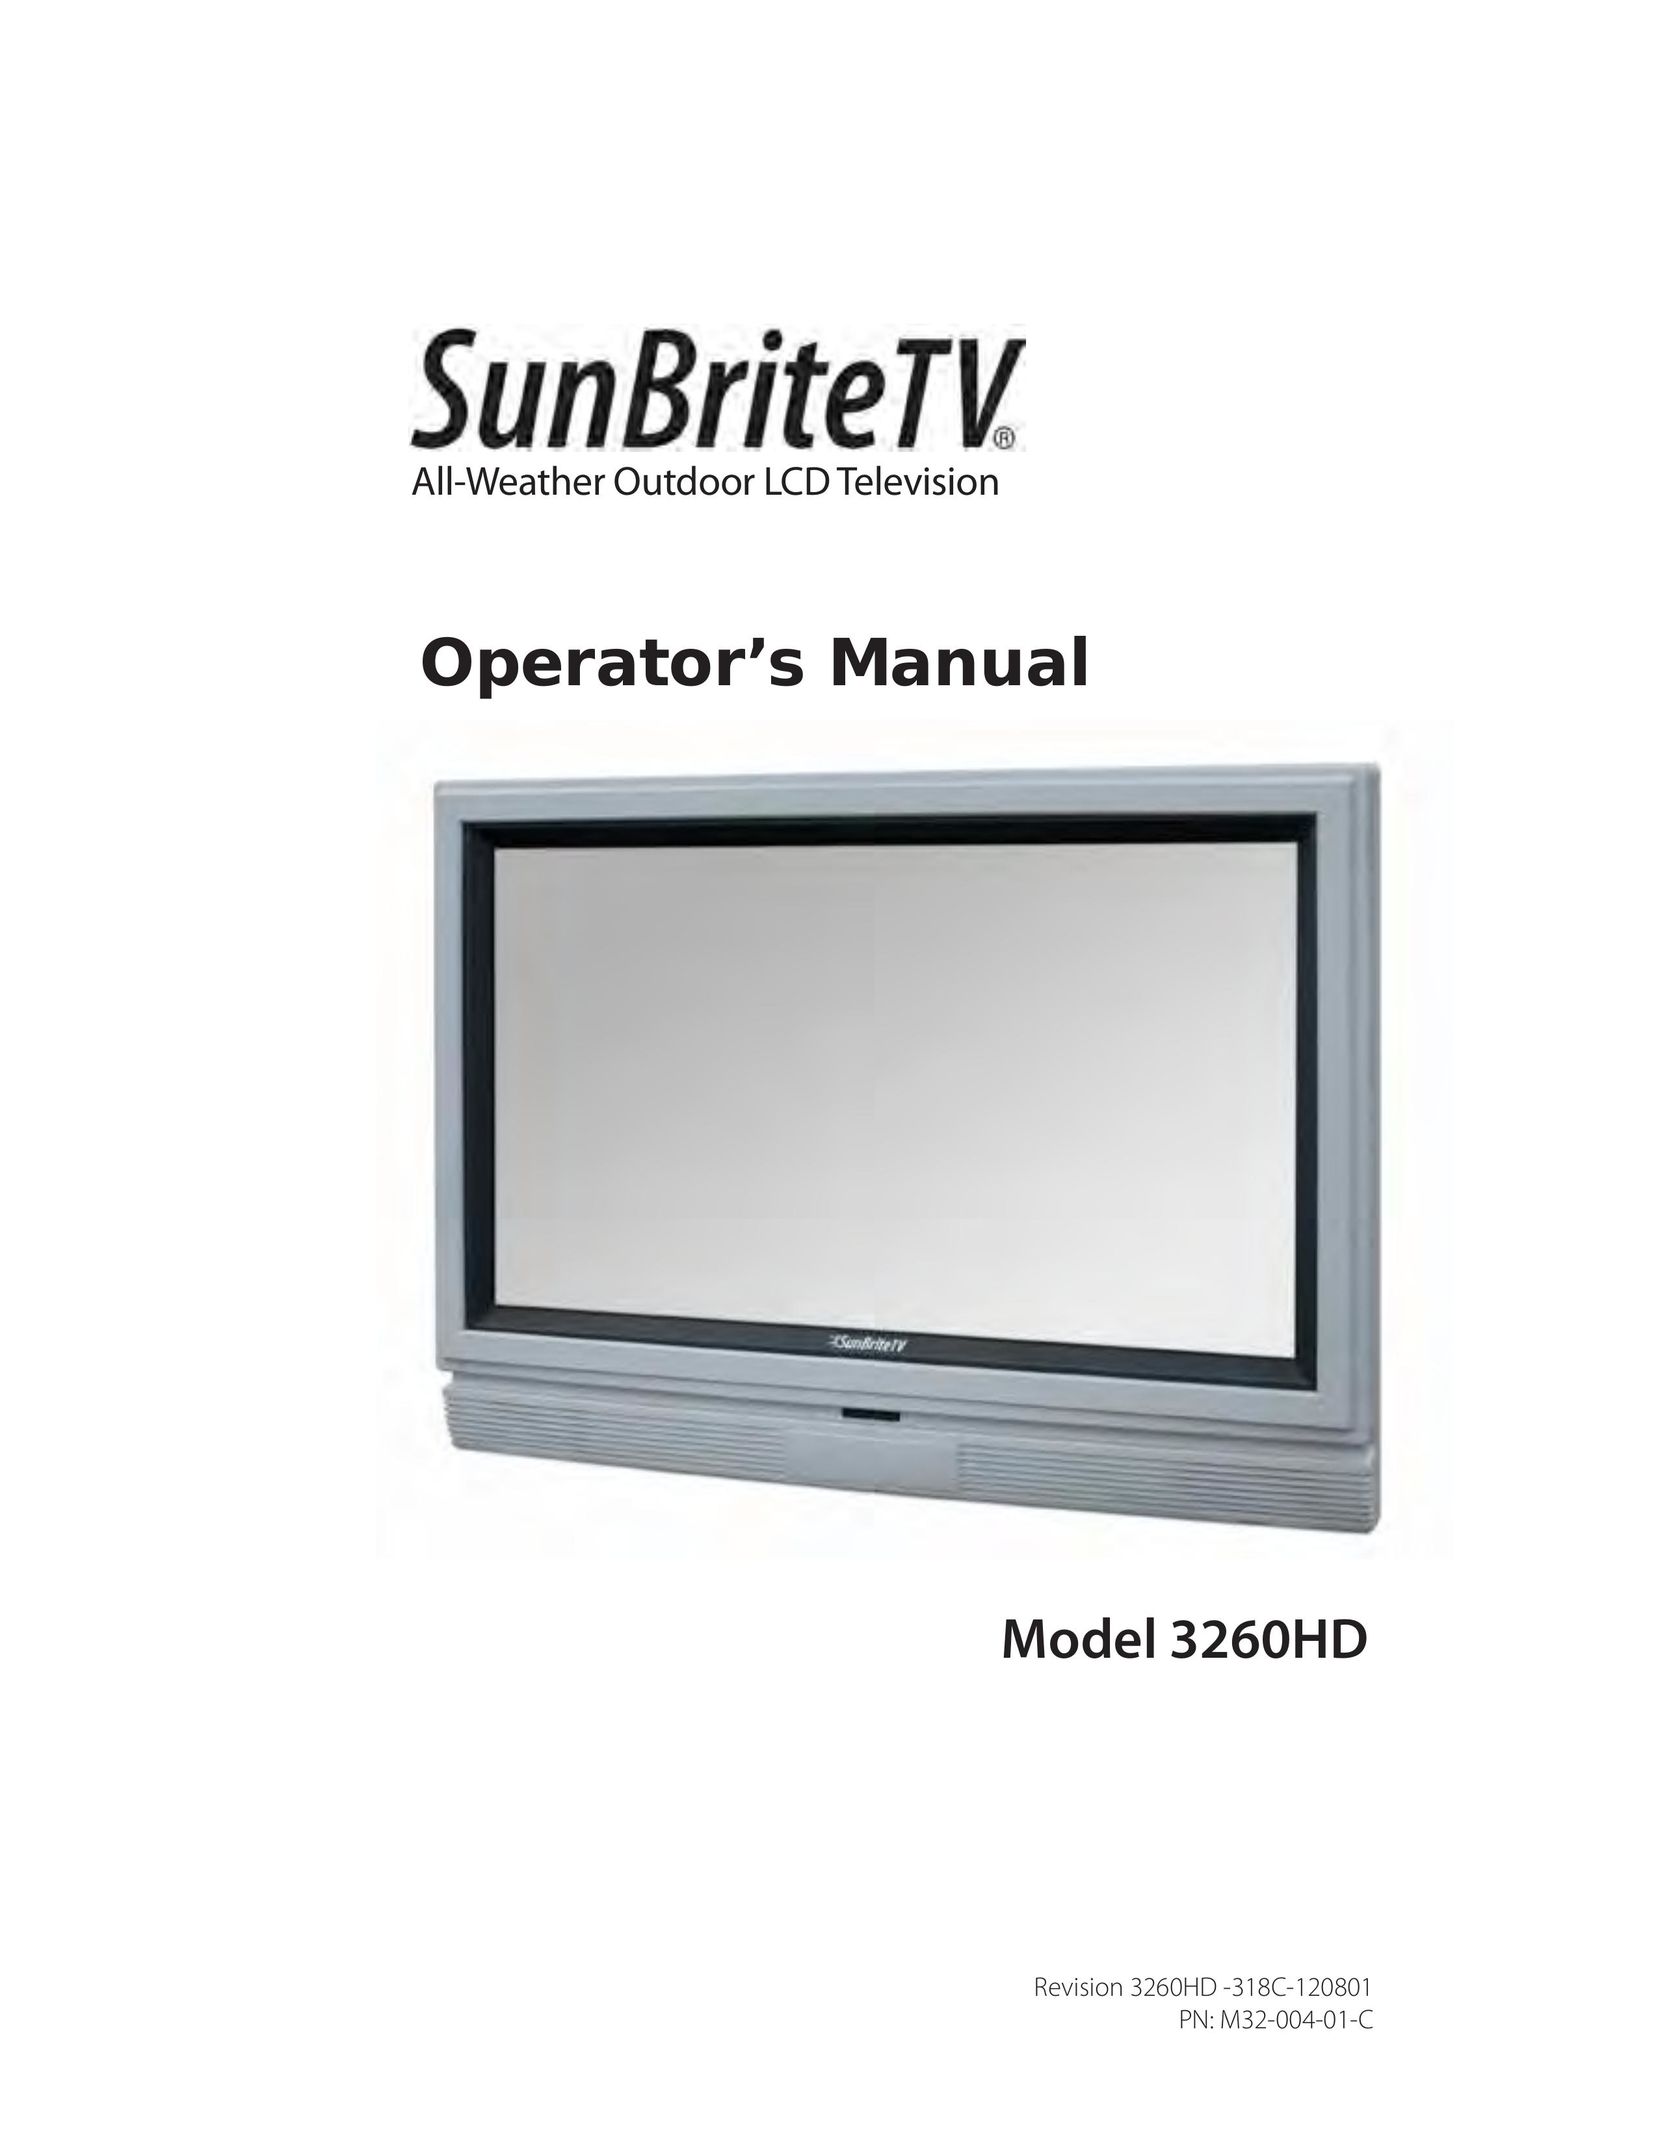 SunBriteTV SB-3260HD-BL Flat Panel Television User Manual